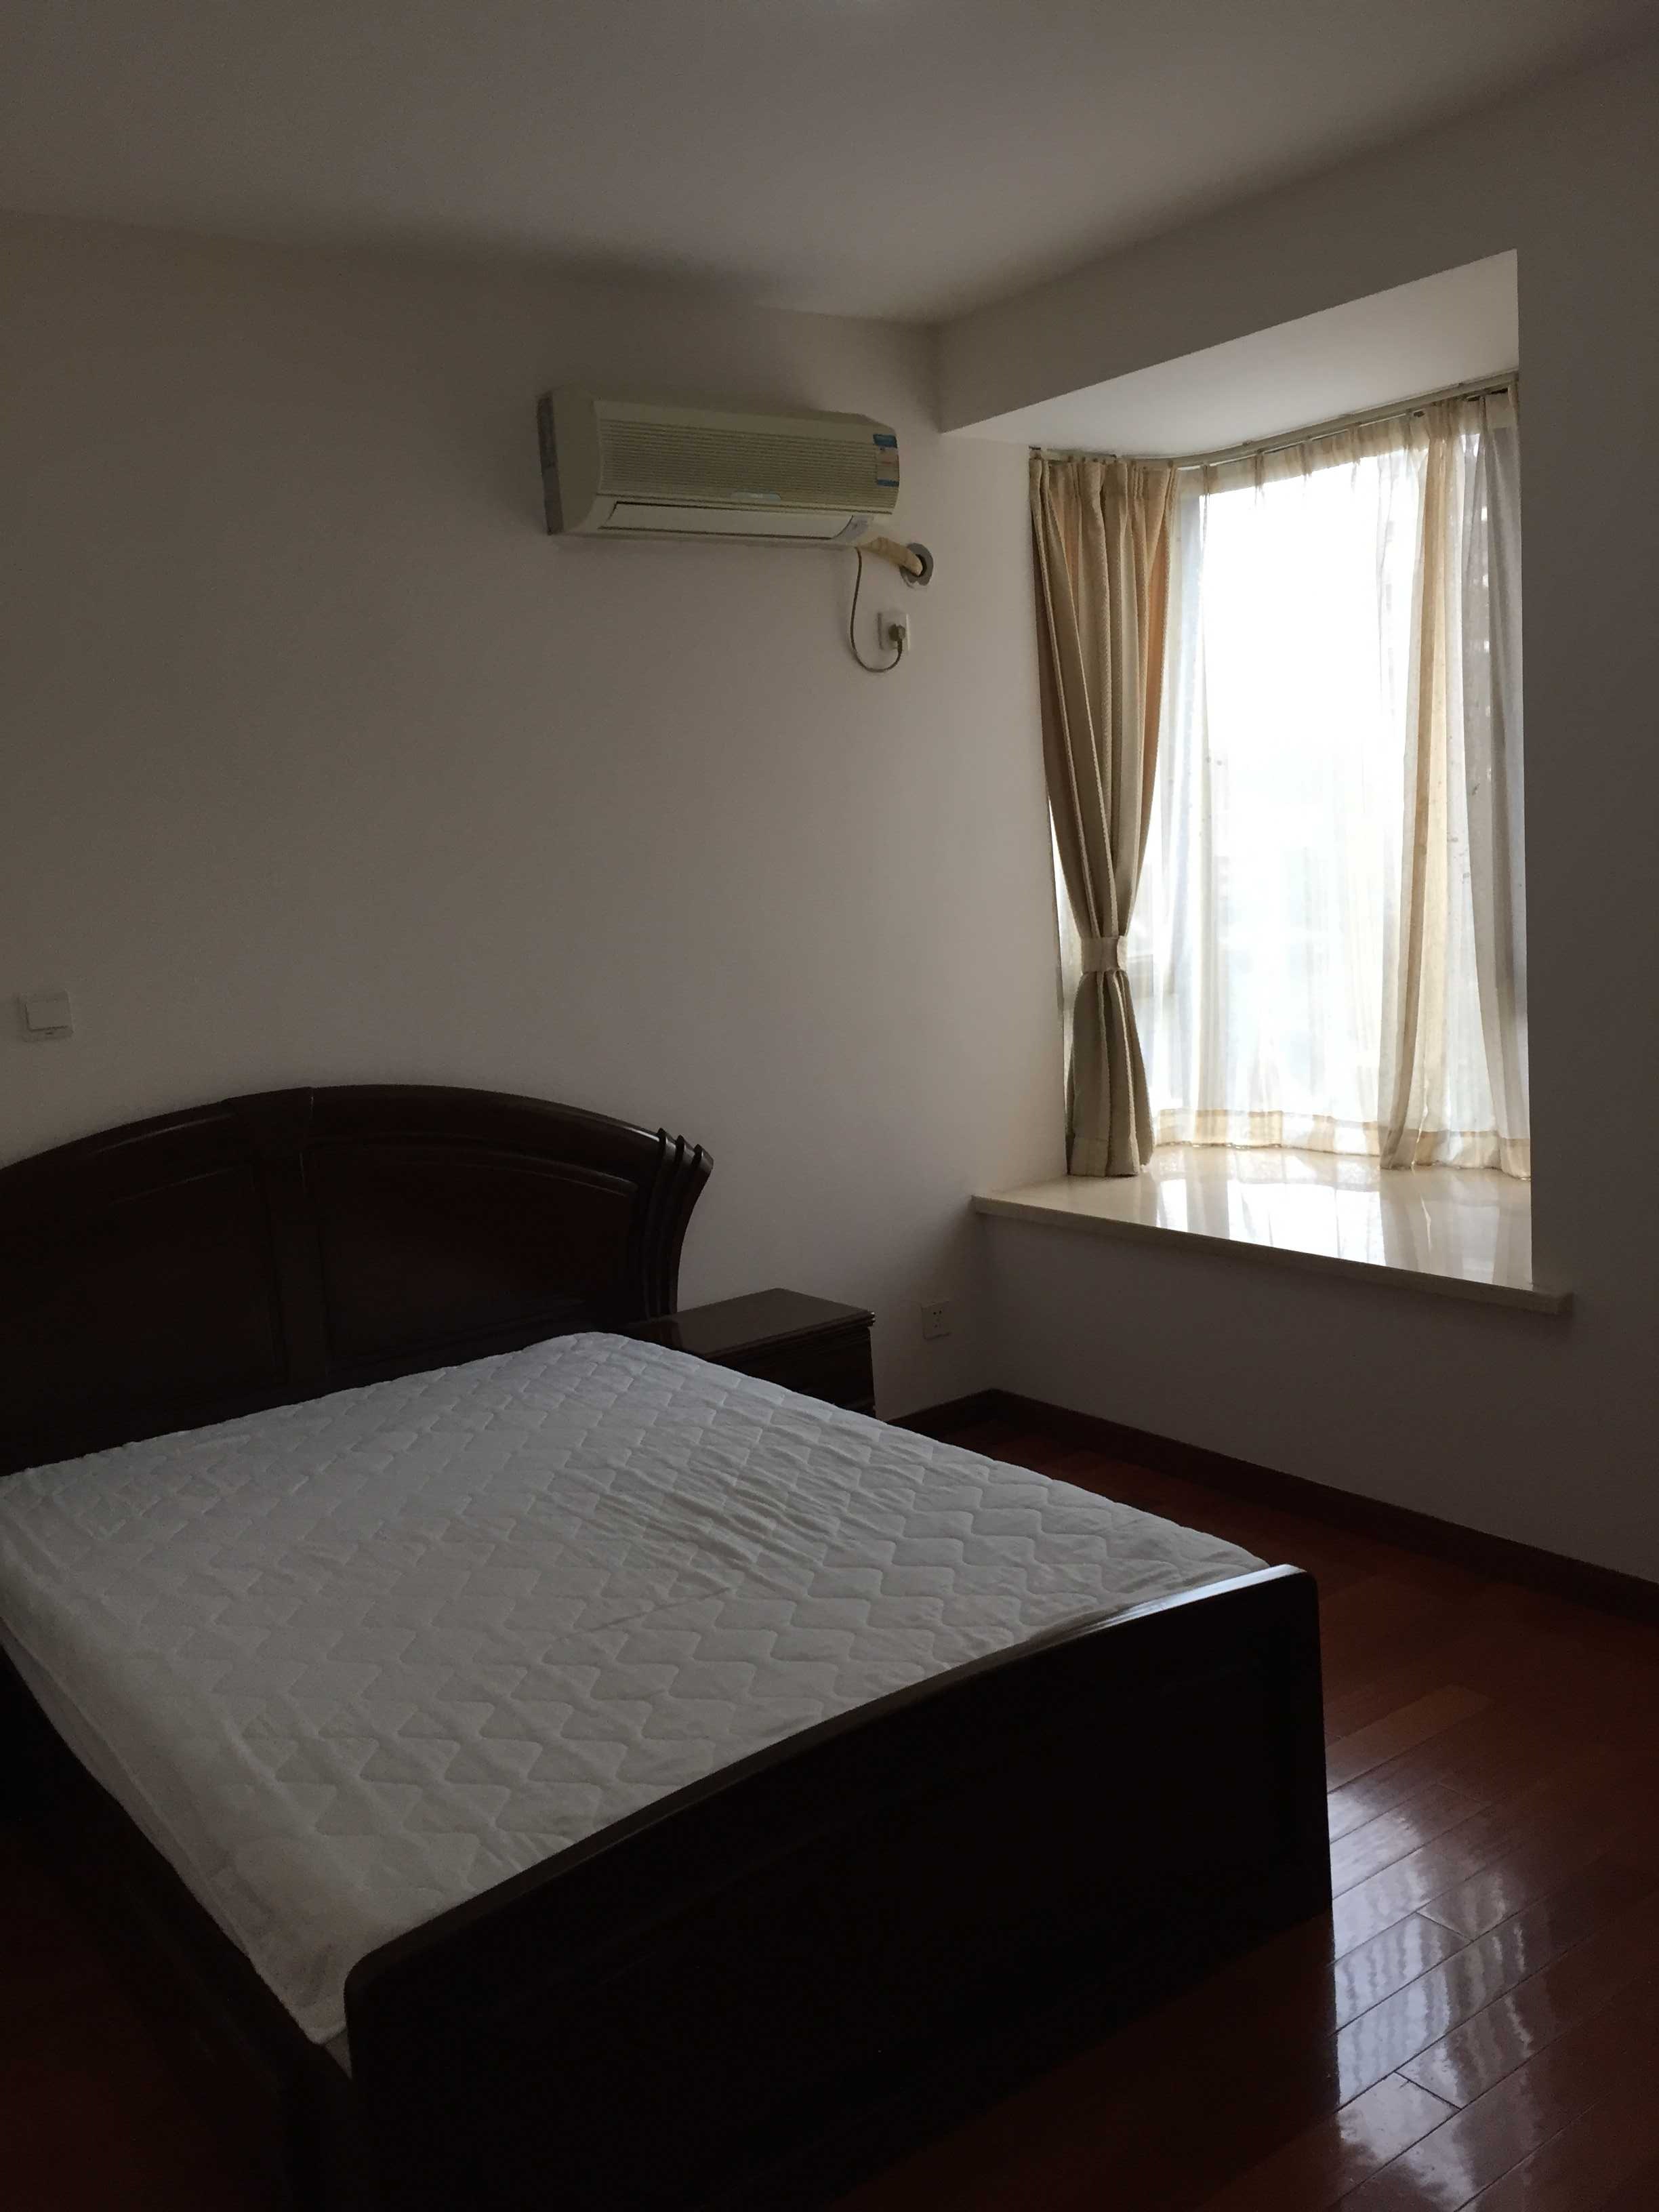 alcove windows Good Price, Bright Spacious Apartment for Rent near Shanghai Zoo